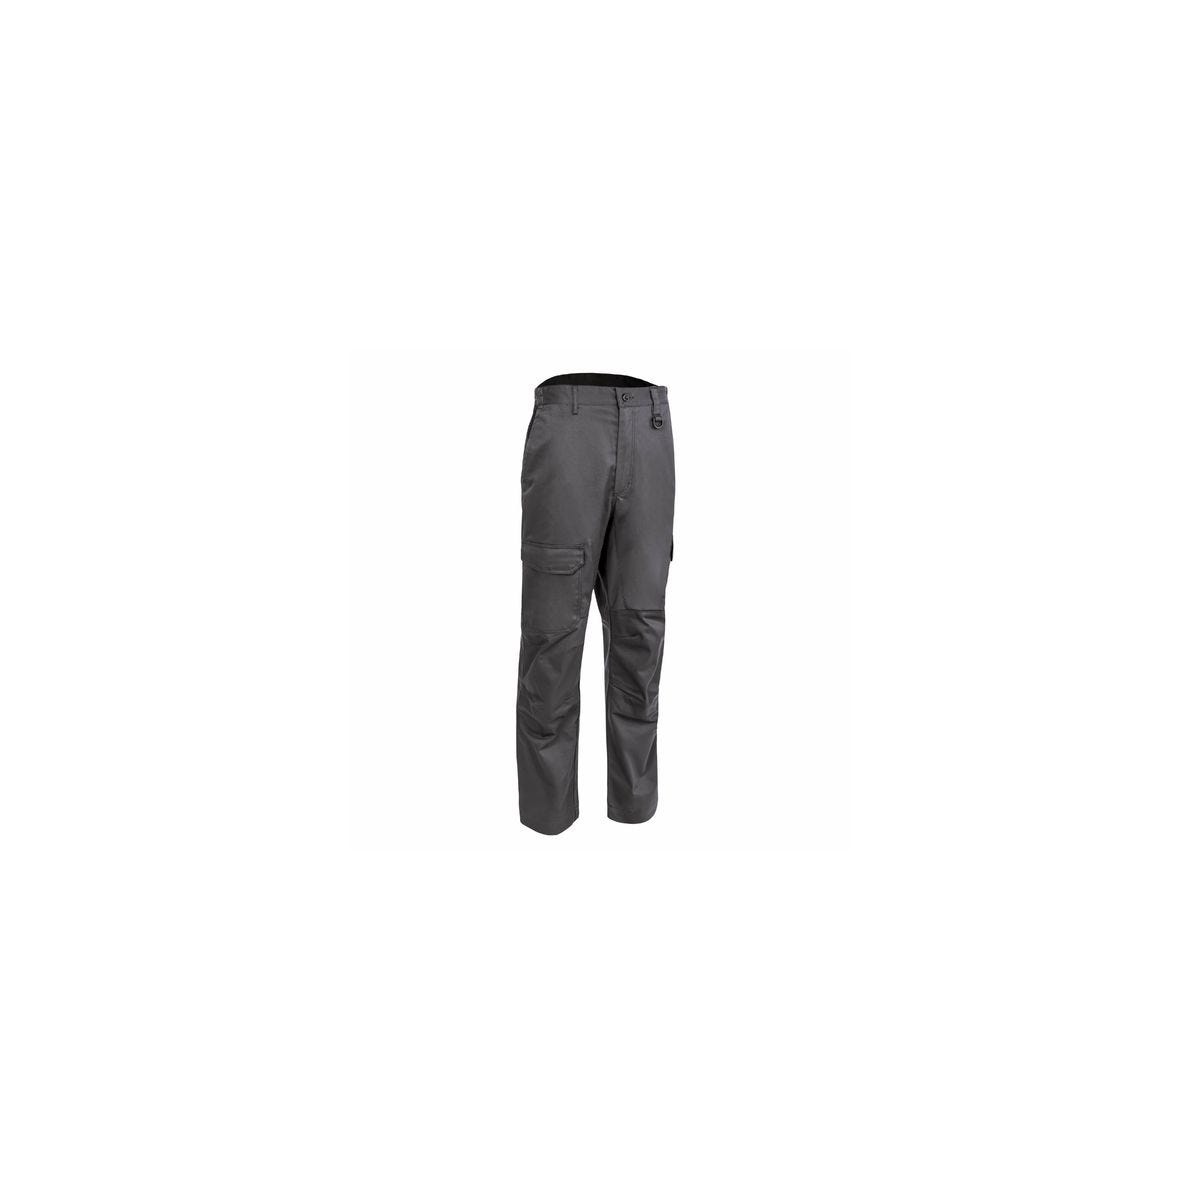 Pantalon IRAZU Anthracite - COVERGUARD - Taille S 0